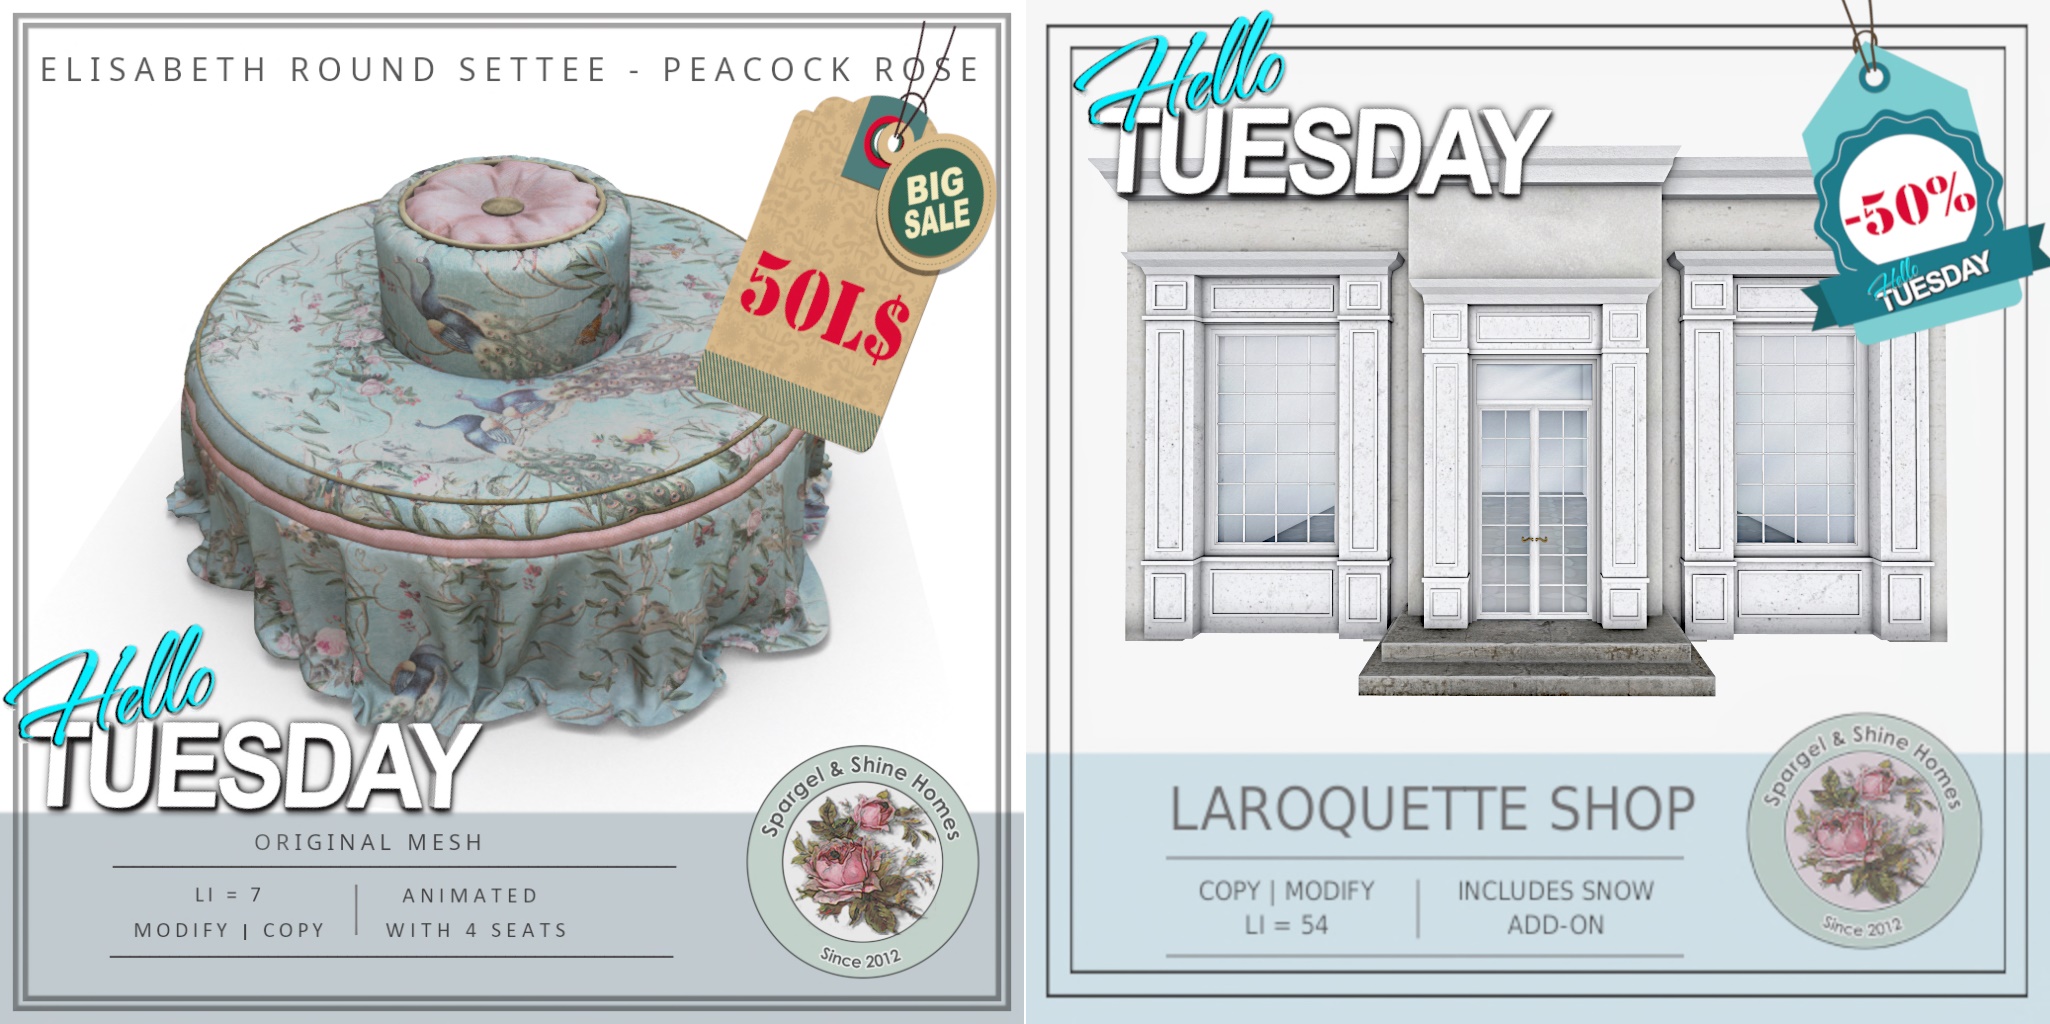 Spargel & Shine – Elisabeth Round Settee & Laroquette Shop